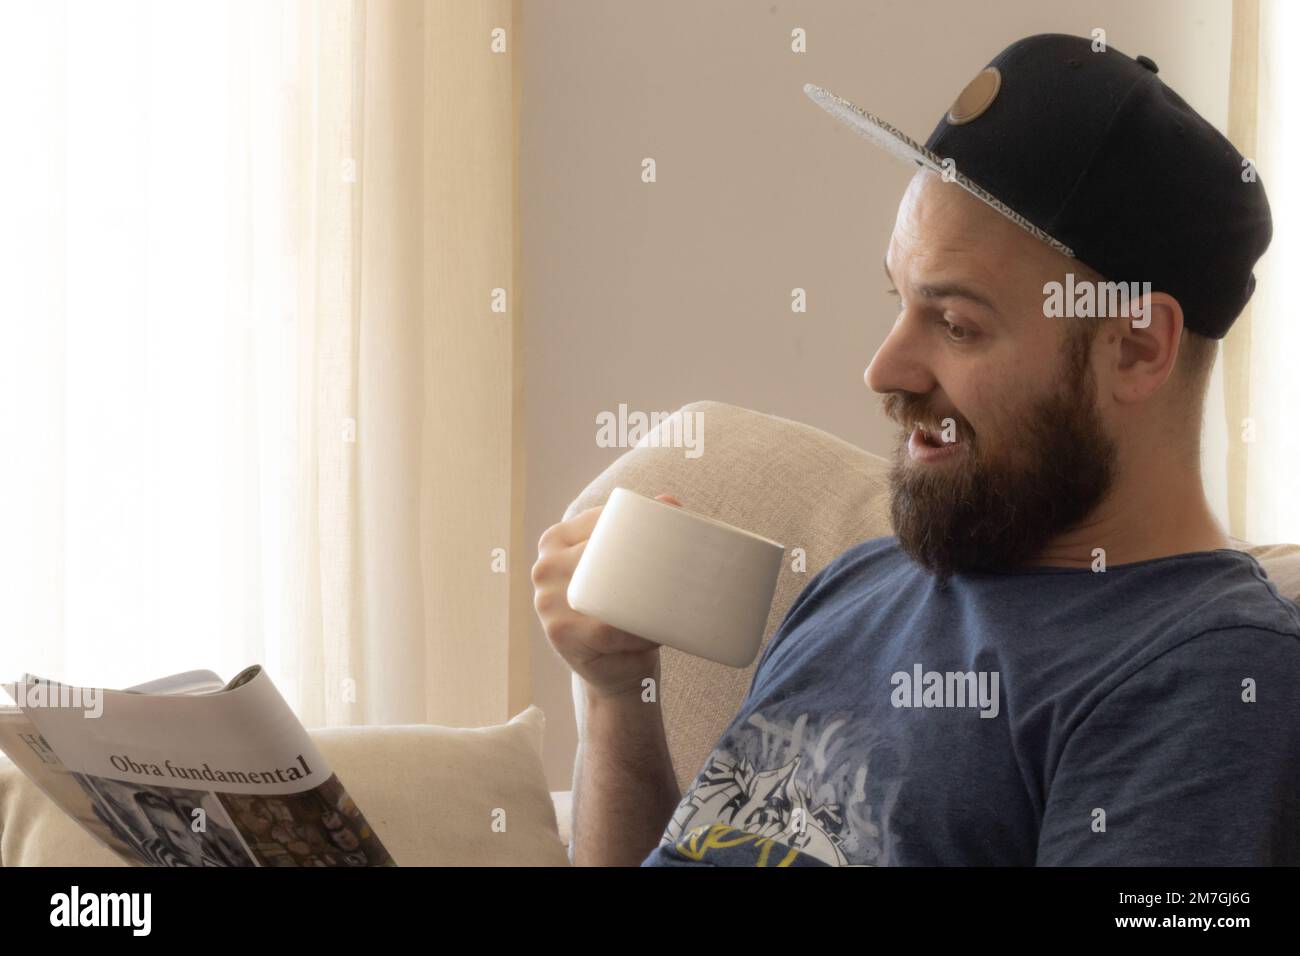 Caucasian bearded man drinking coffee Reading a magazine. "Obra fundamental" means fundamental work. Stock Photo